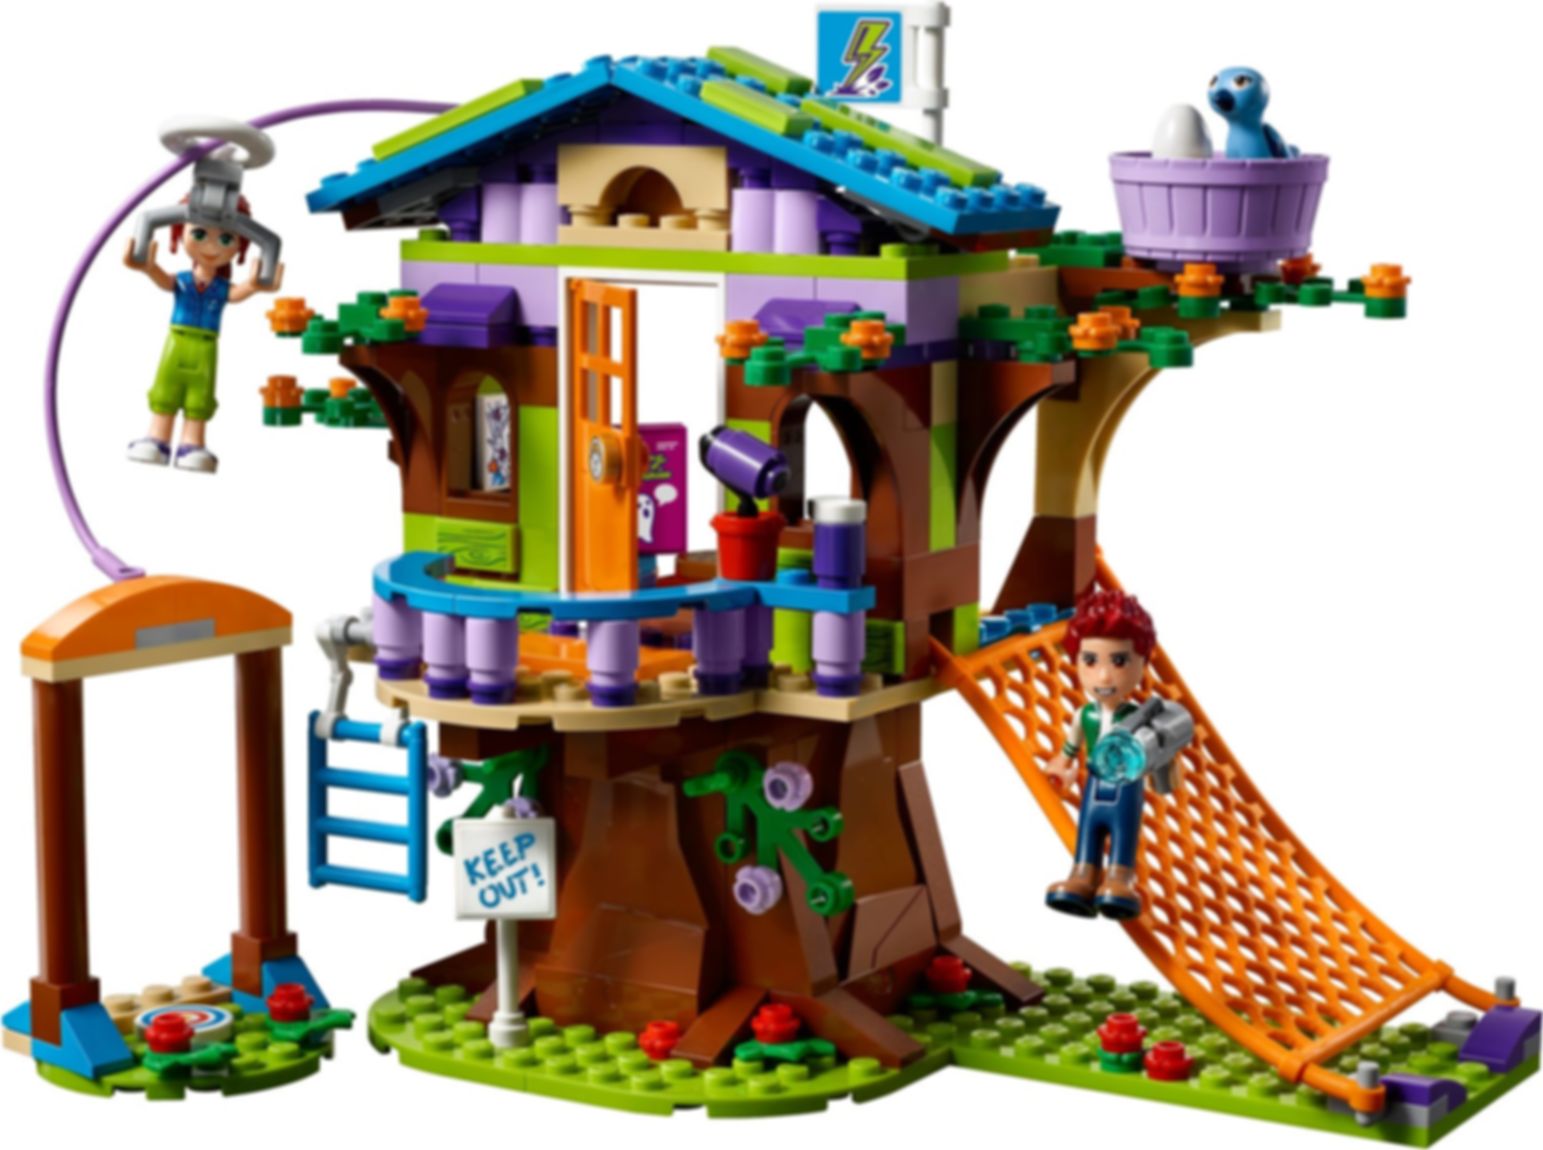 LEGO® Friends Mia's Tree House components